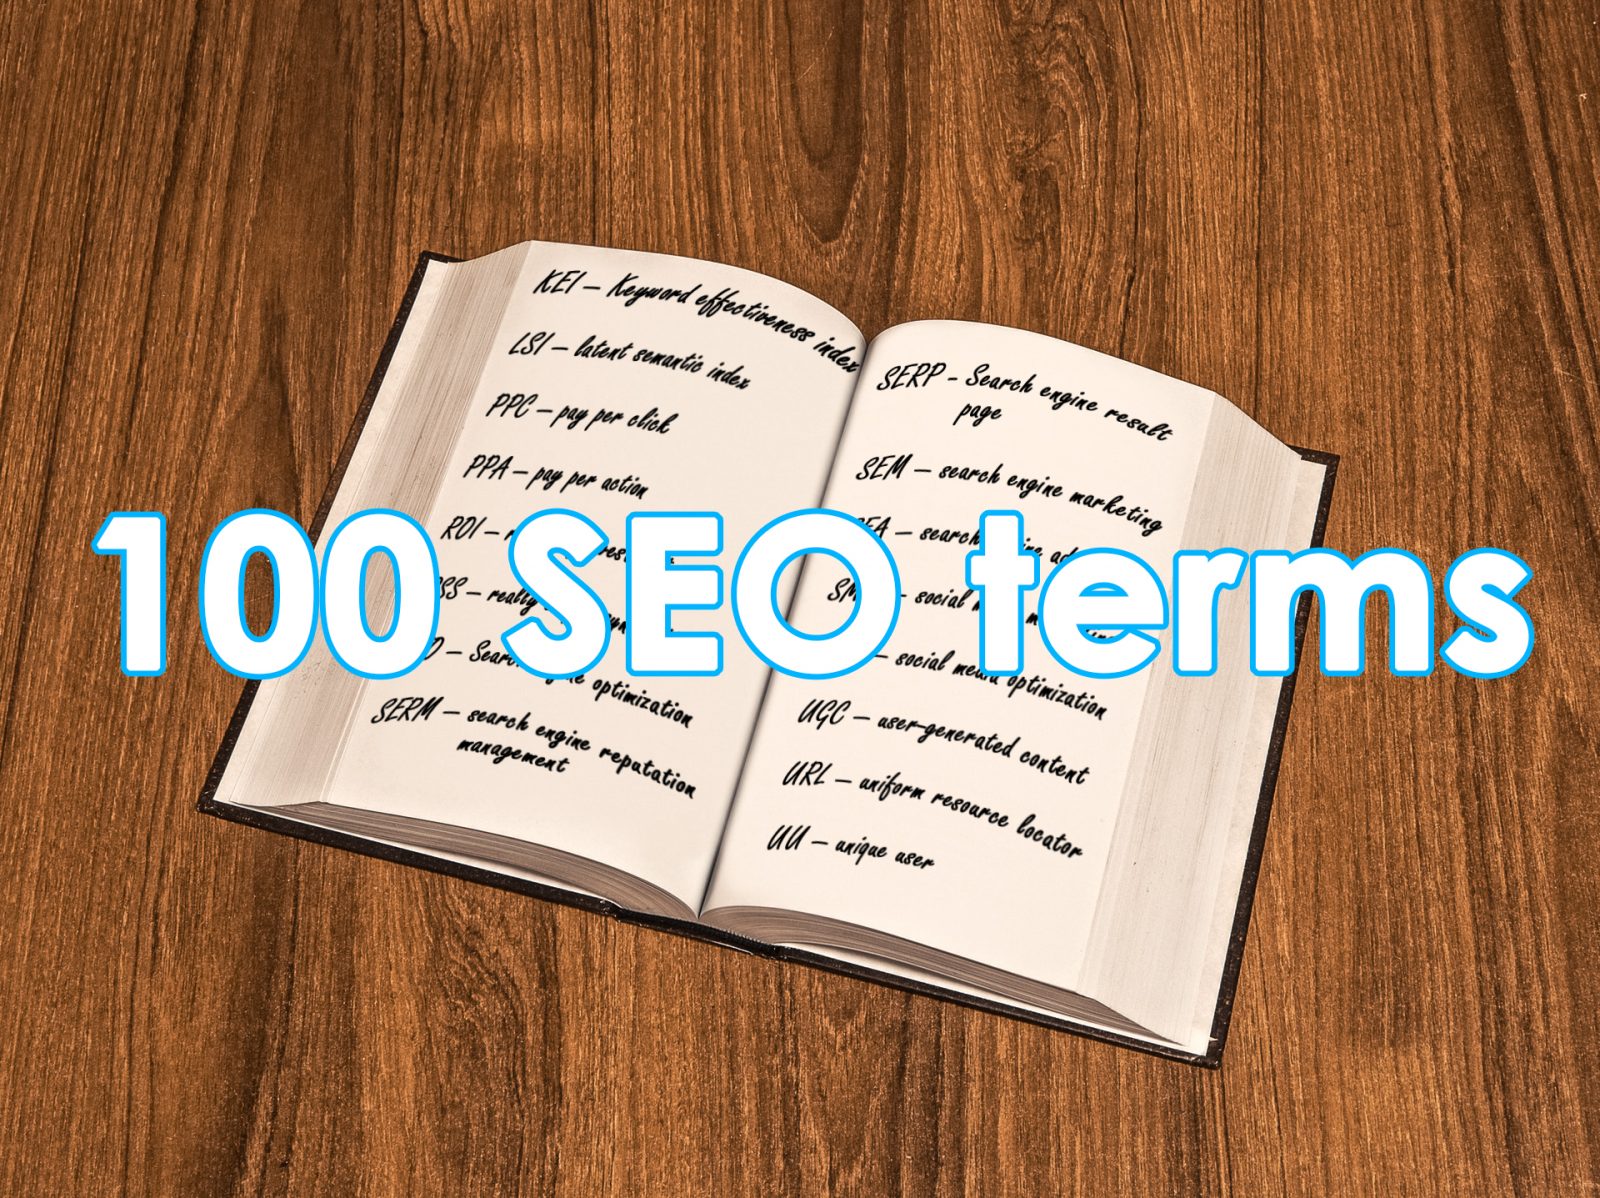 SEO glossary - 100 SEO terms